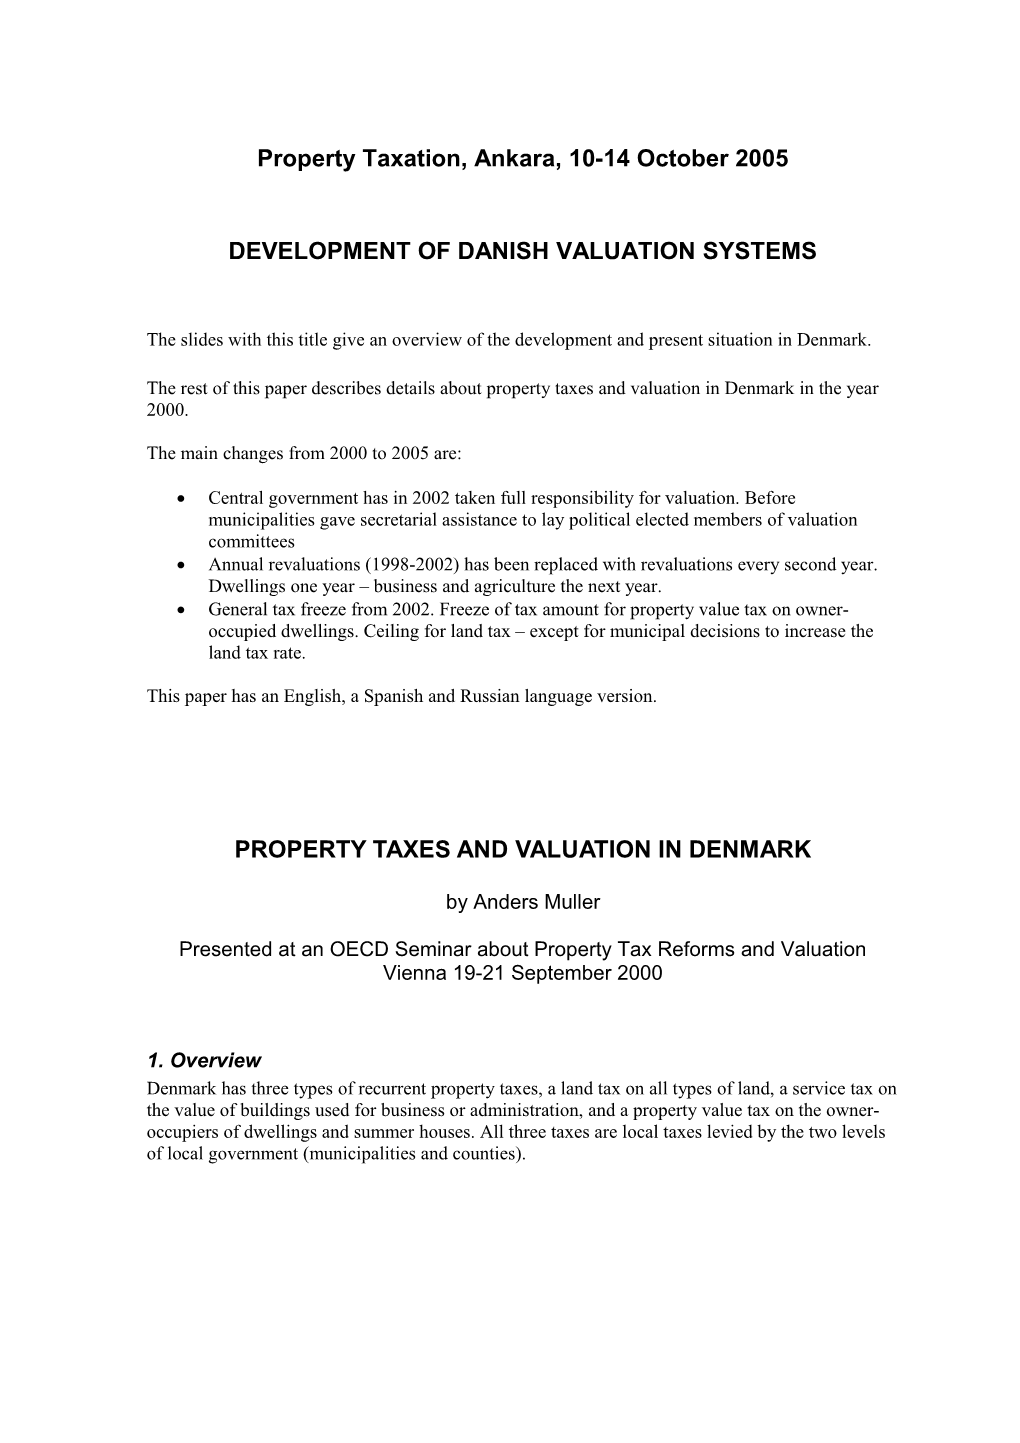 Development of Danish Valuation Systems